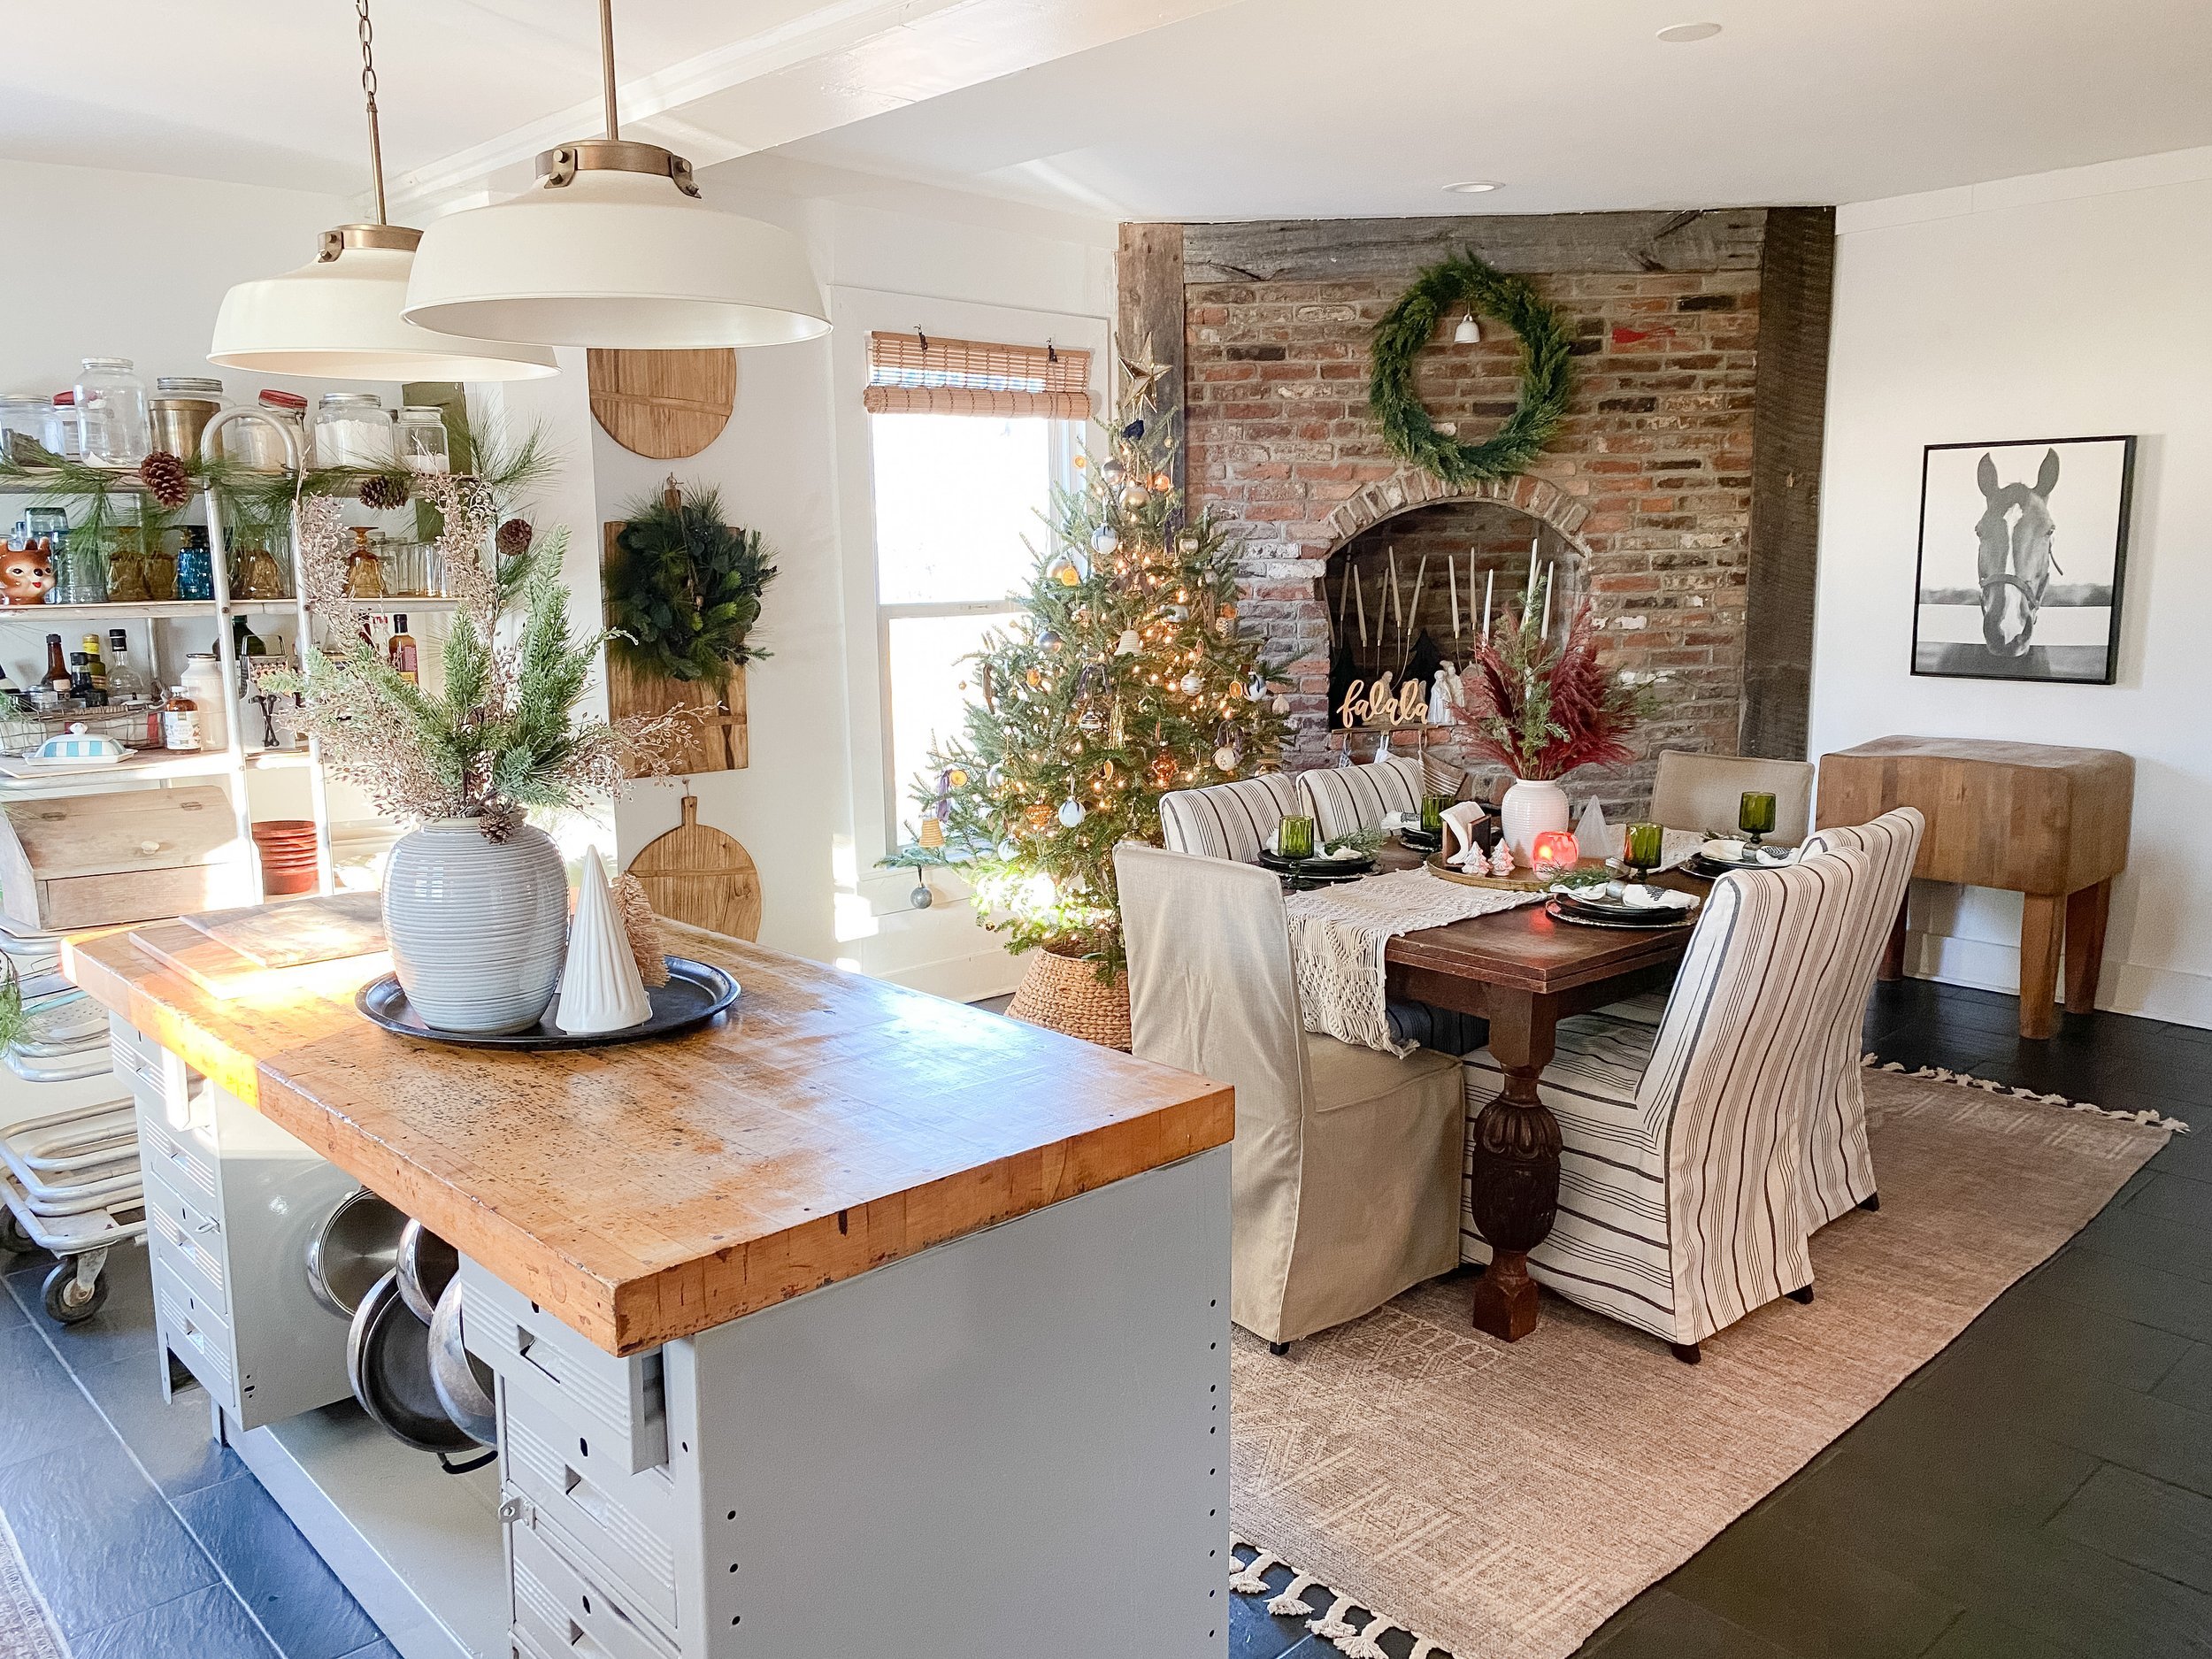 Neutral Kitchen Christmas Decor - Domestically Blissful